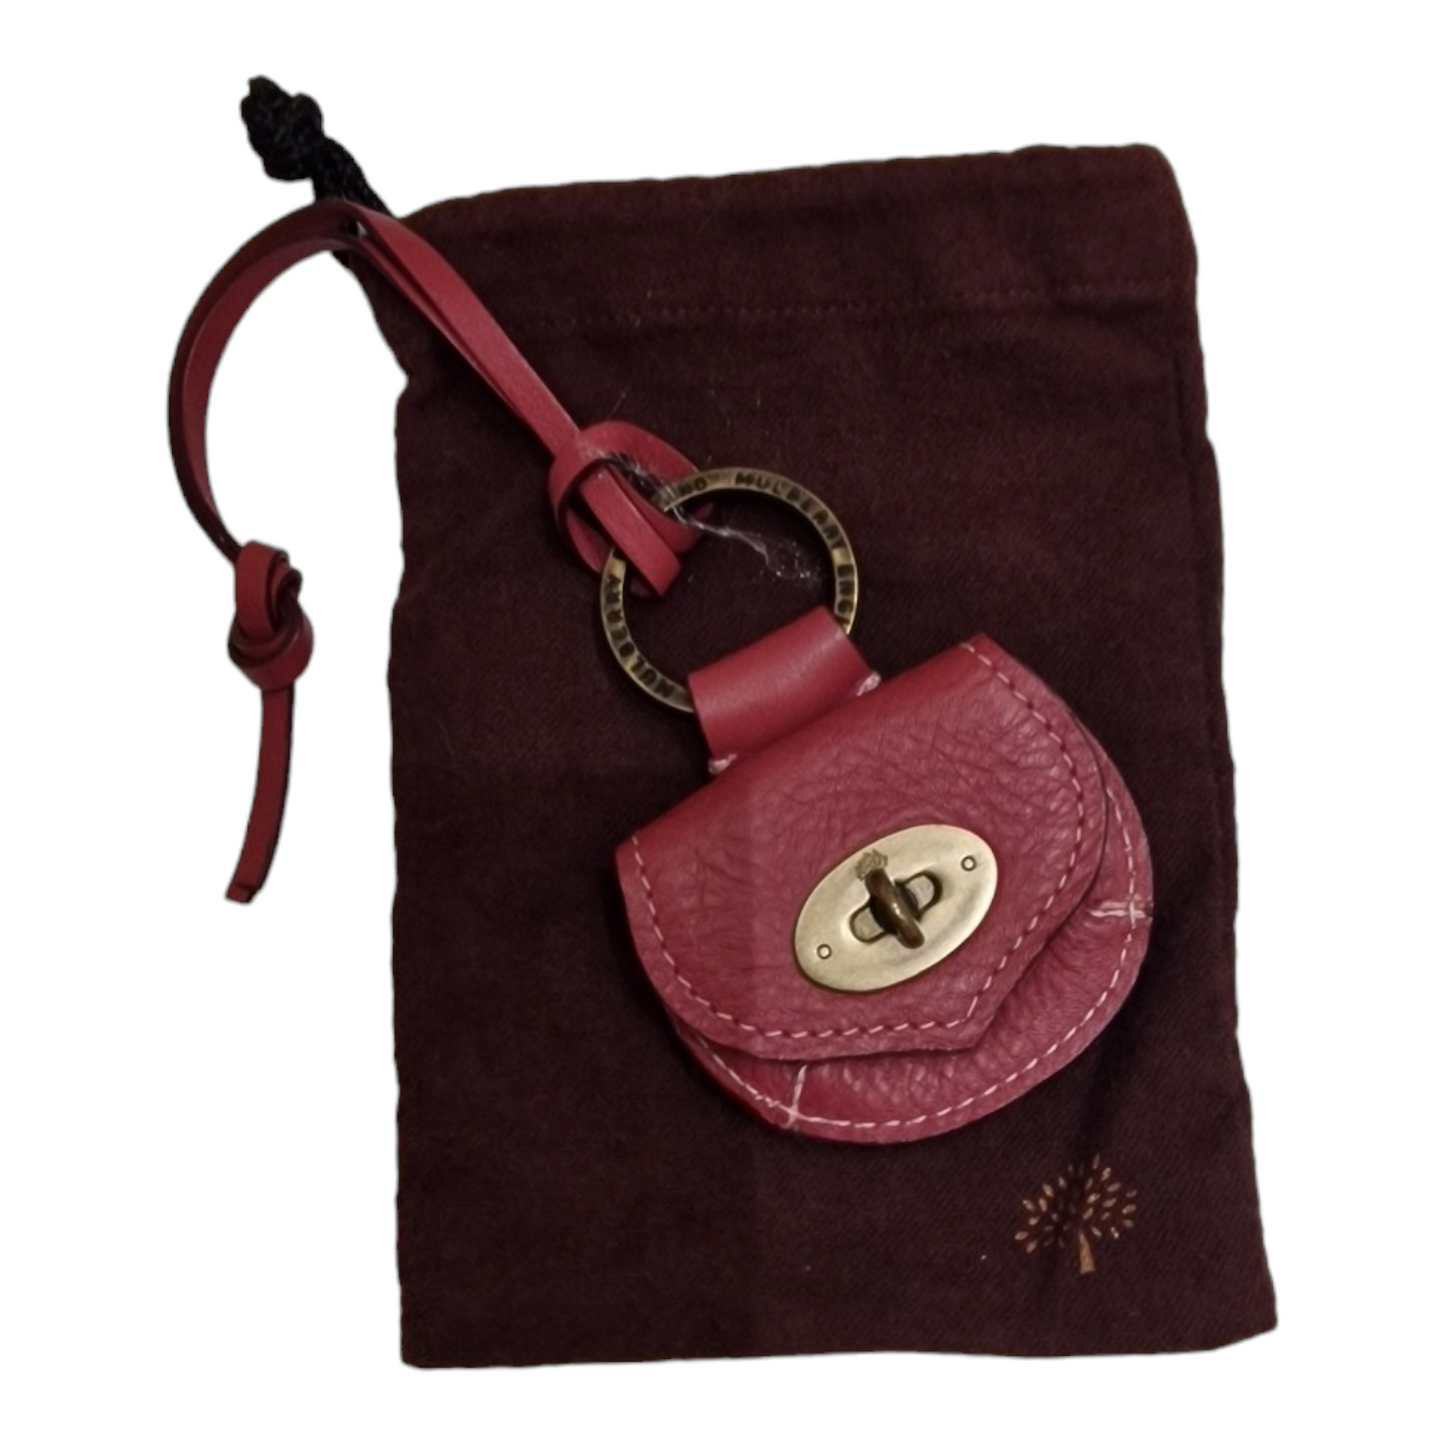 Mulberry Handbag charm/keyring, Rose